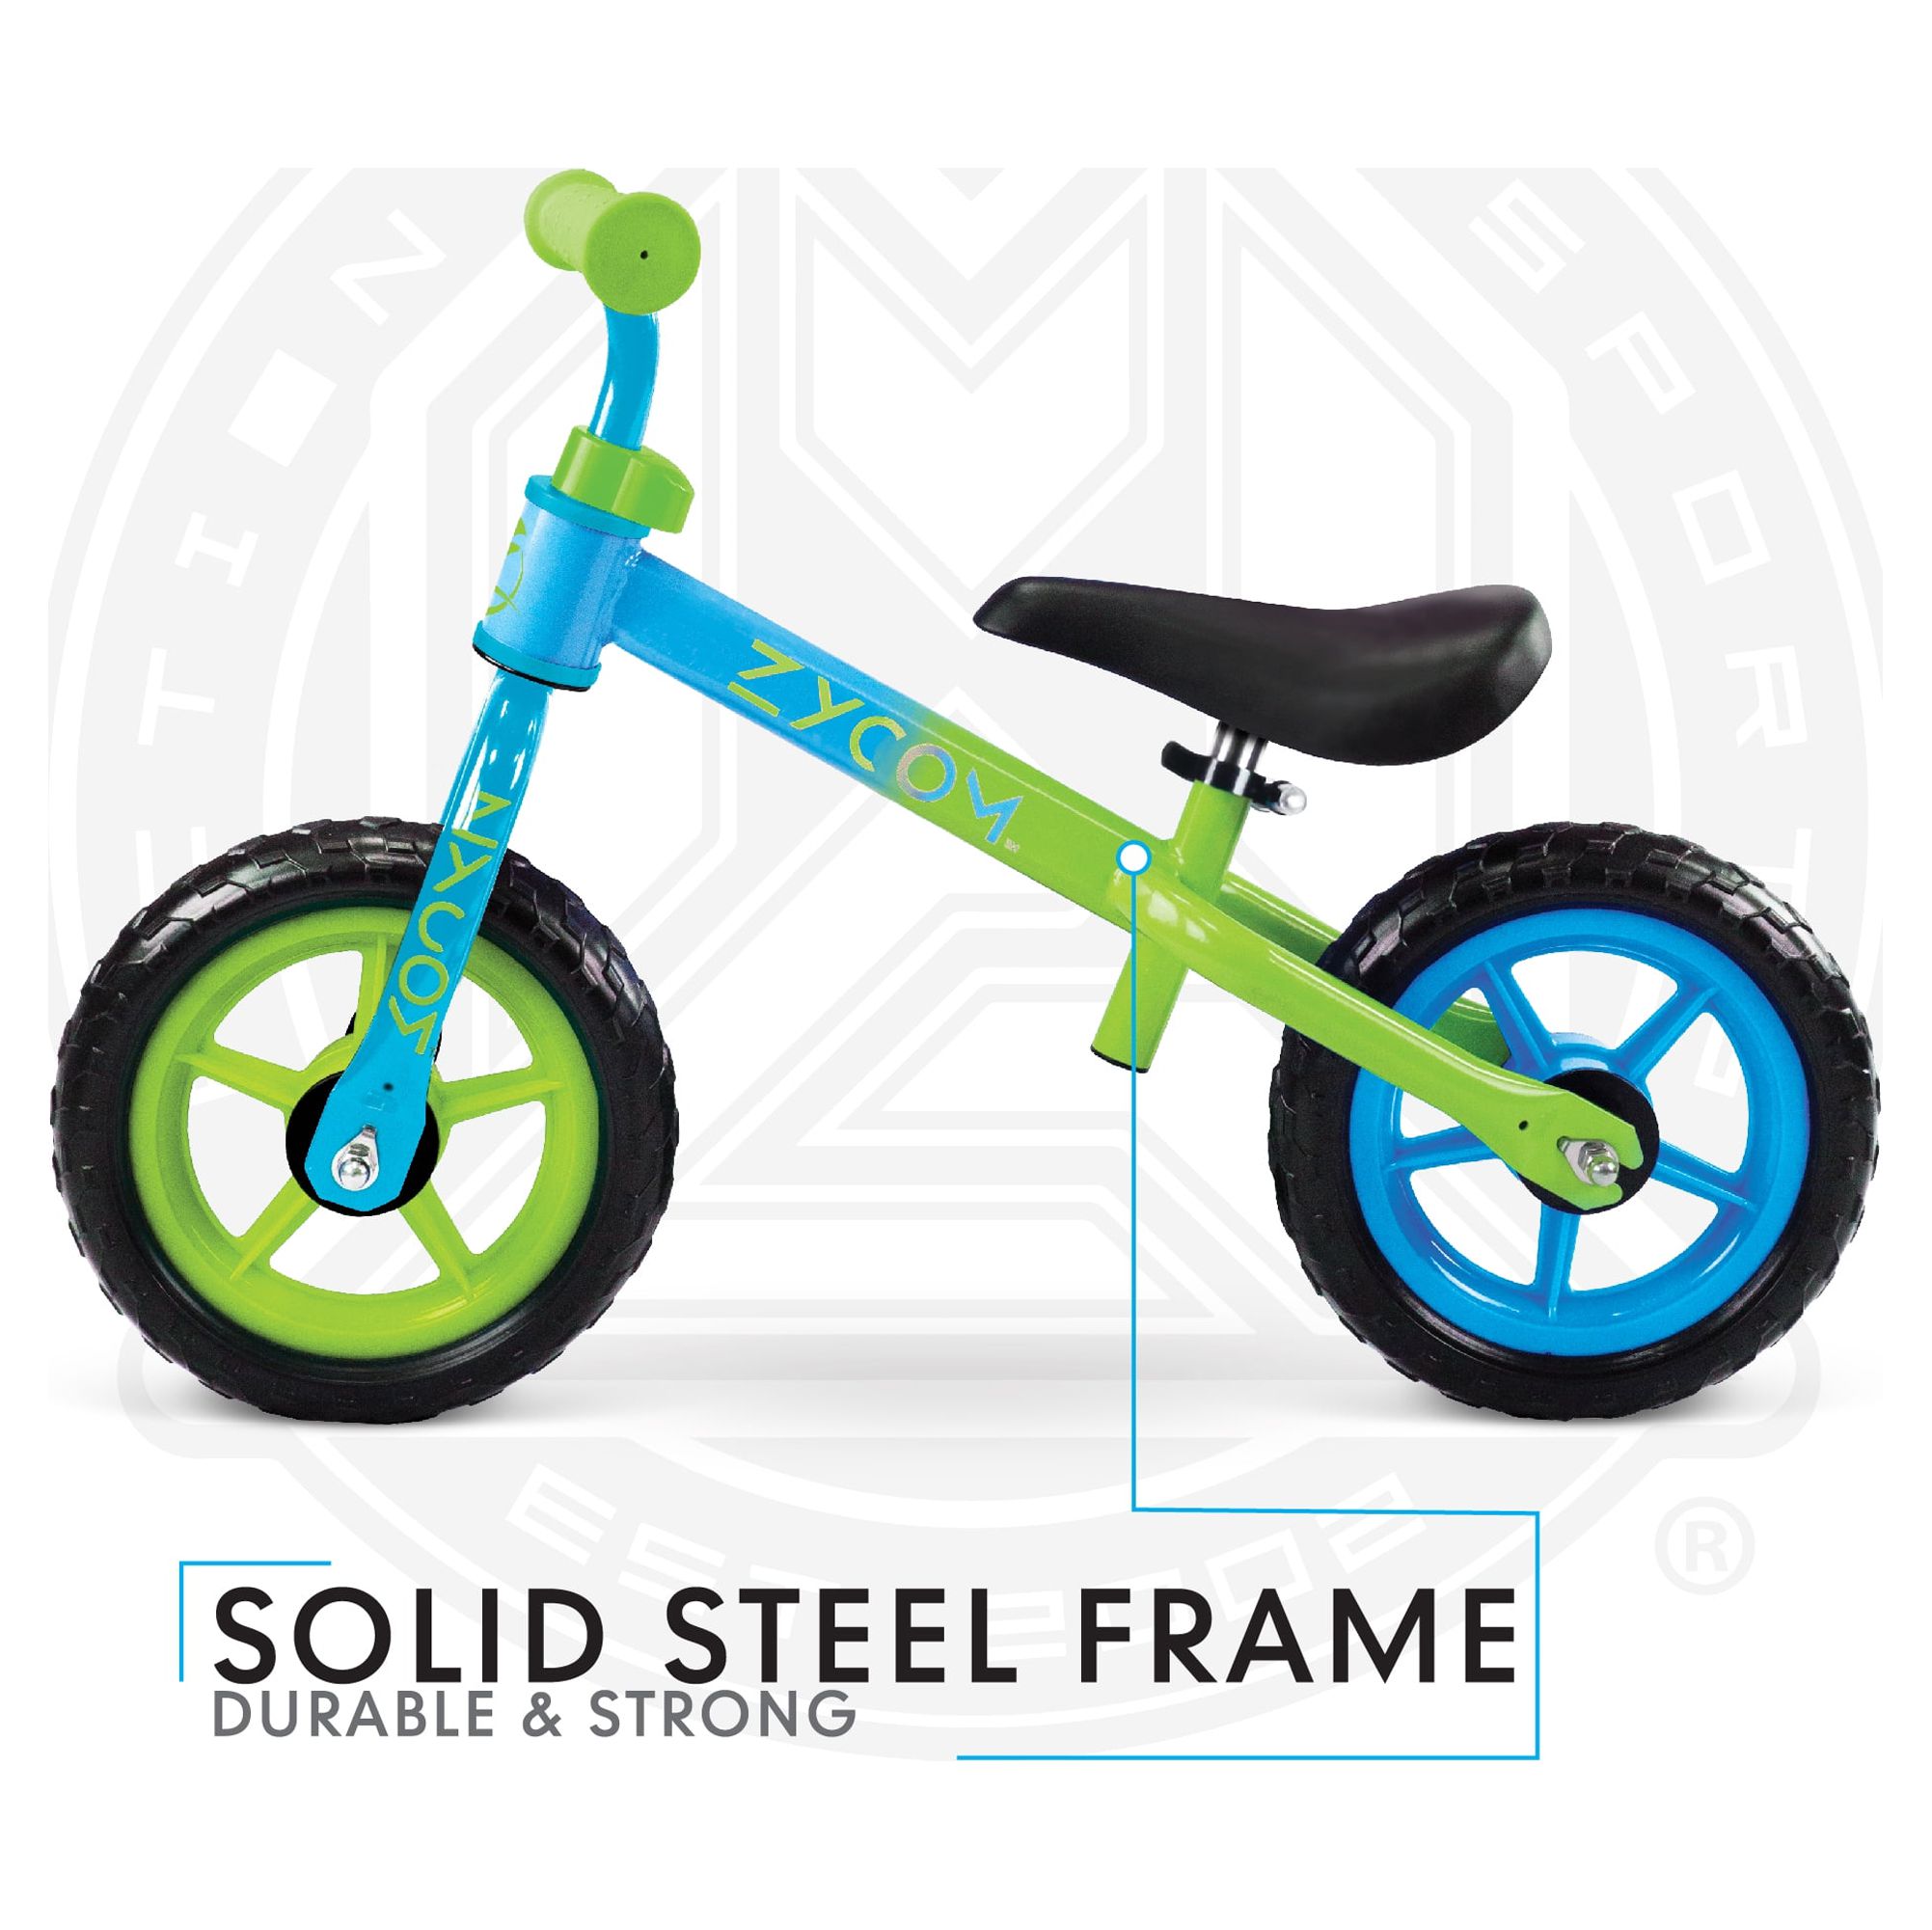 Zycom 10-inch Toddlers Balance Bike Adjustable Helmet Airless Wheels Lightweight Training Bike Blue - image 5 of 12